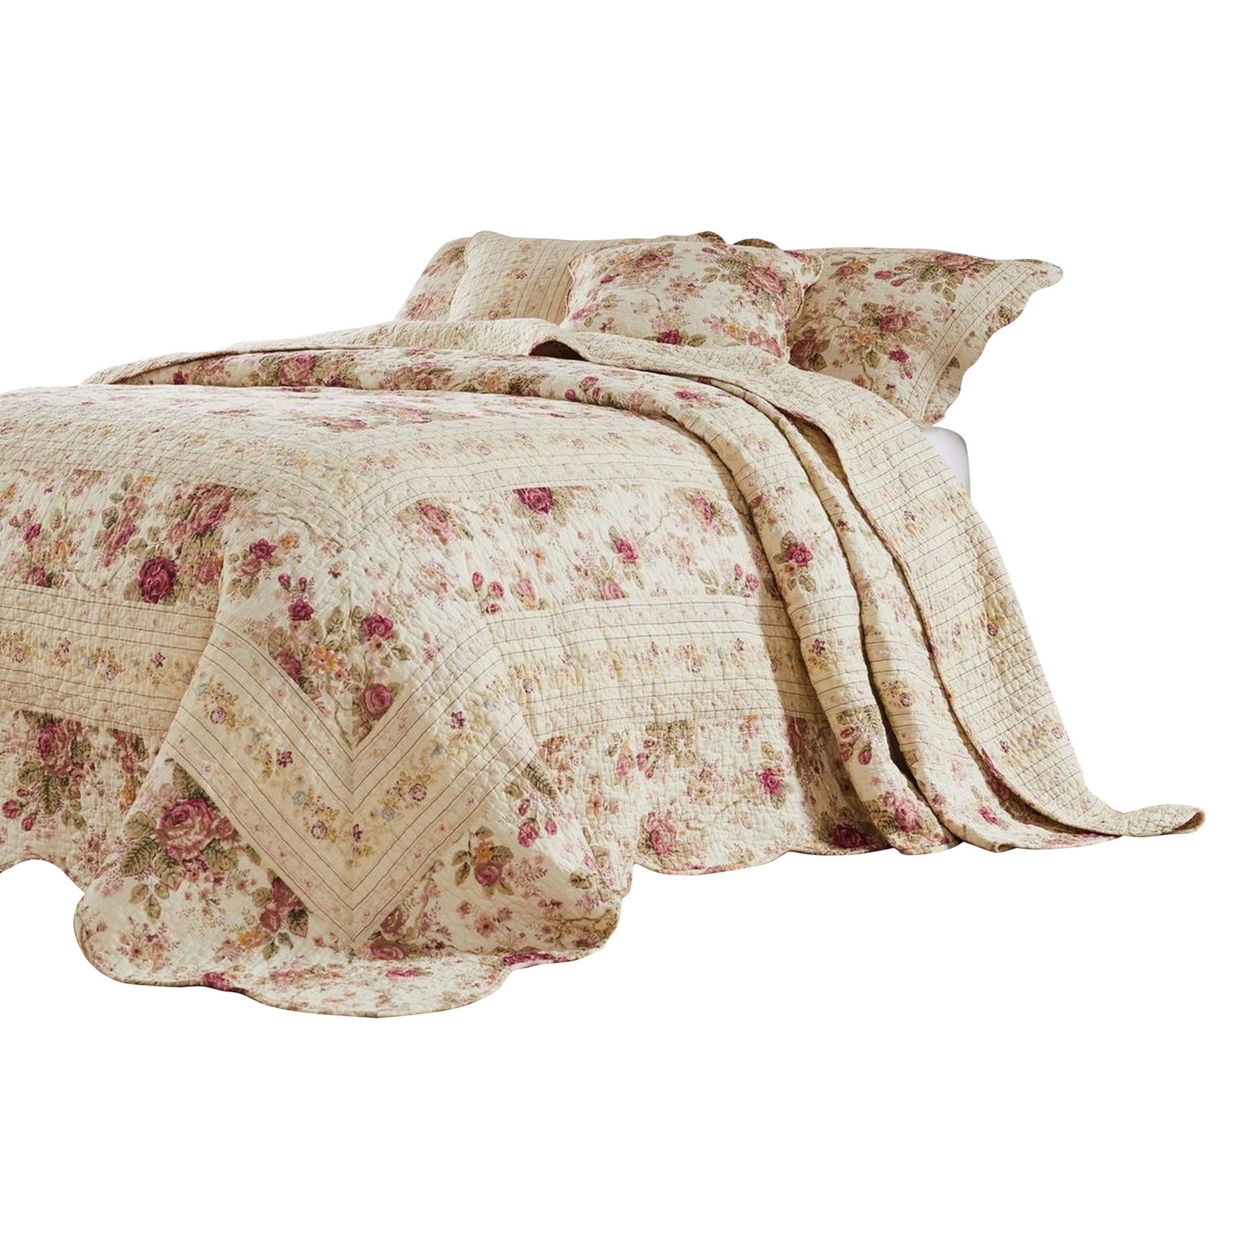 Rosle 3 Piece King Bedspread Set, Floral Print, Scalloped, Cream, Pink- Saltoro Sherpi